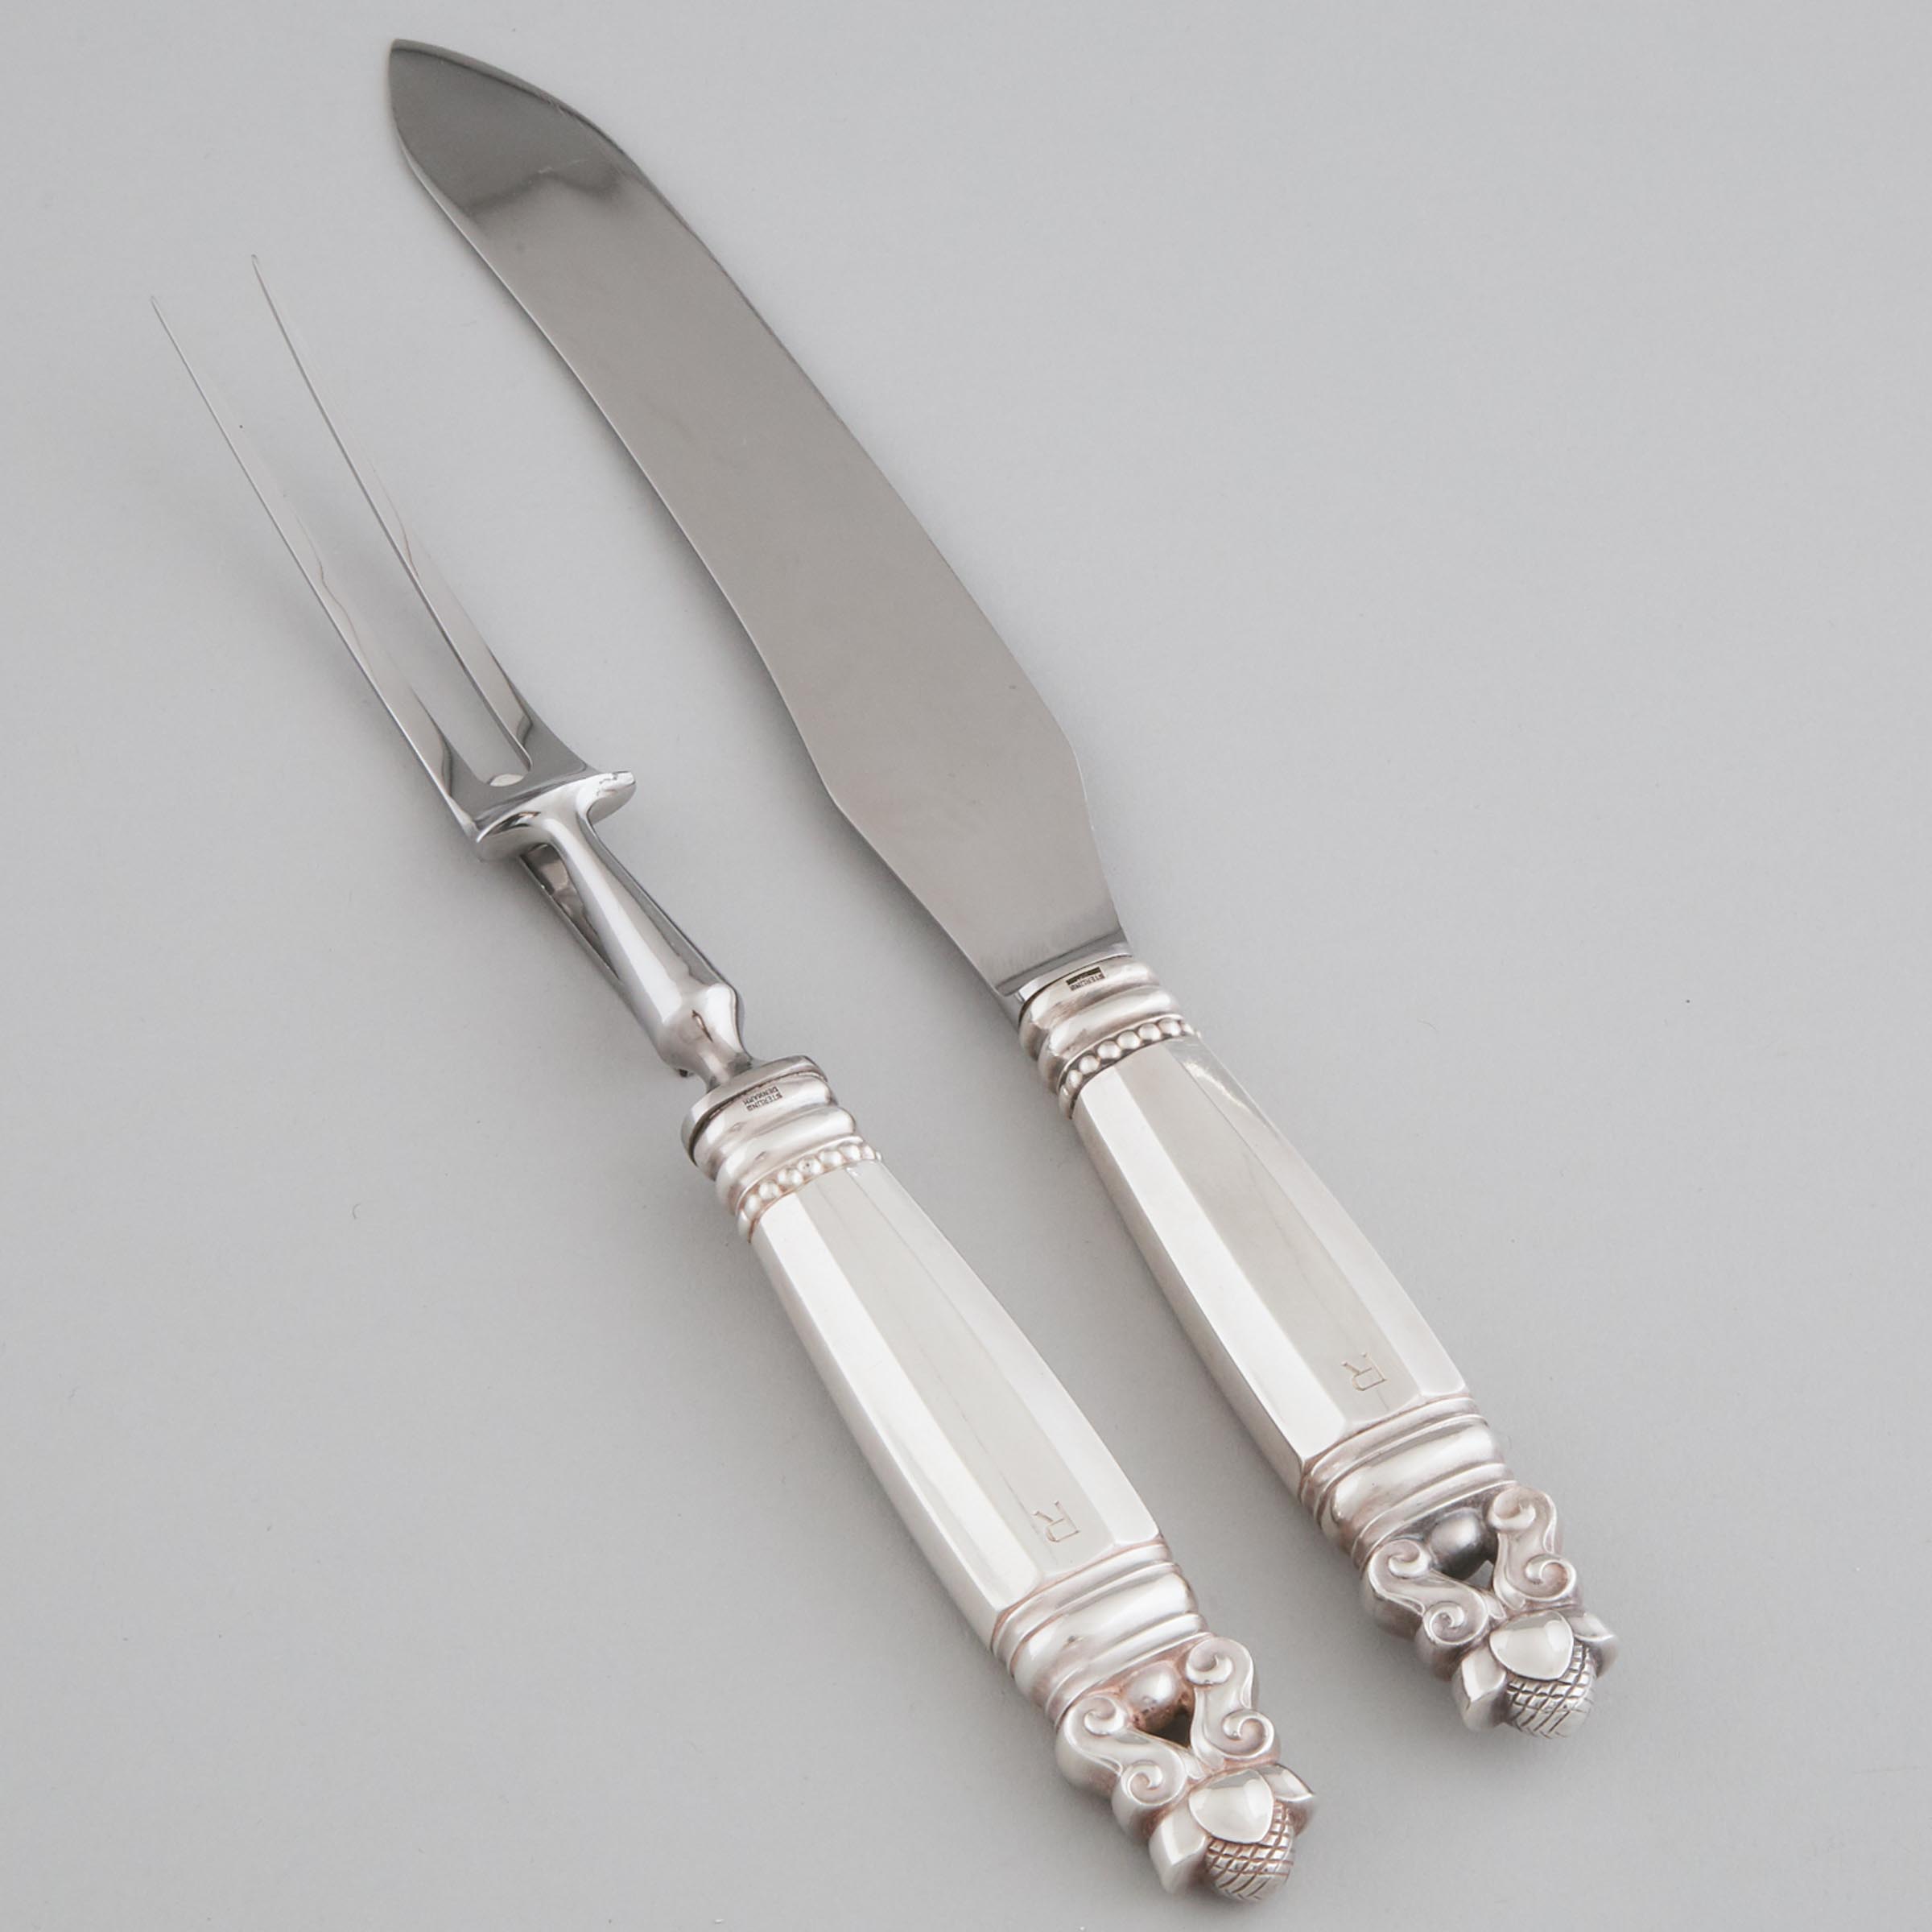 Danish Silver 'Acorn' Pattern Carving Knife and Fork, Georg Jensen, Copenhagen, 20th century